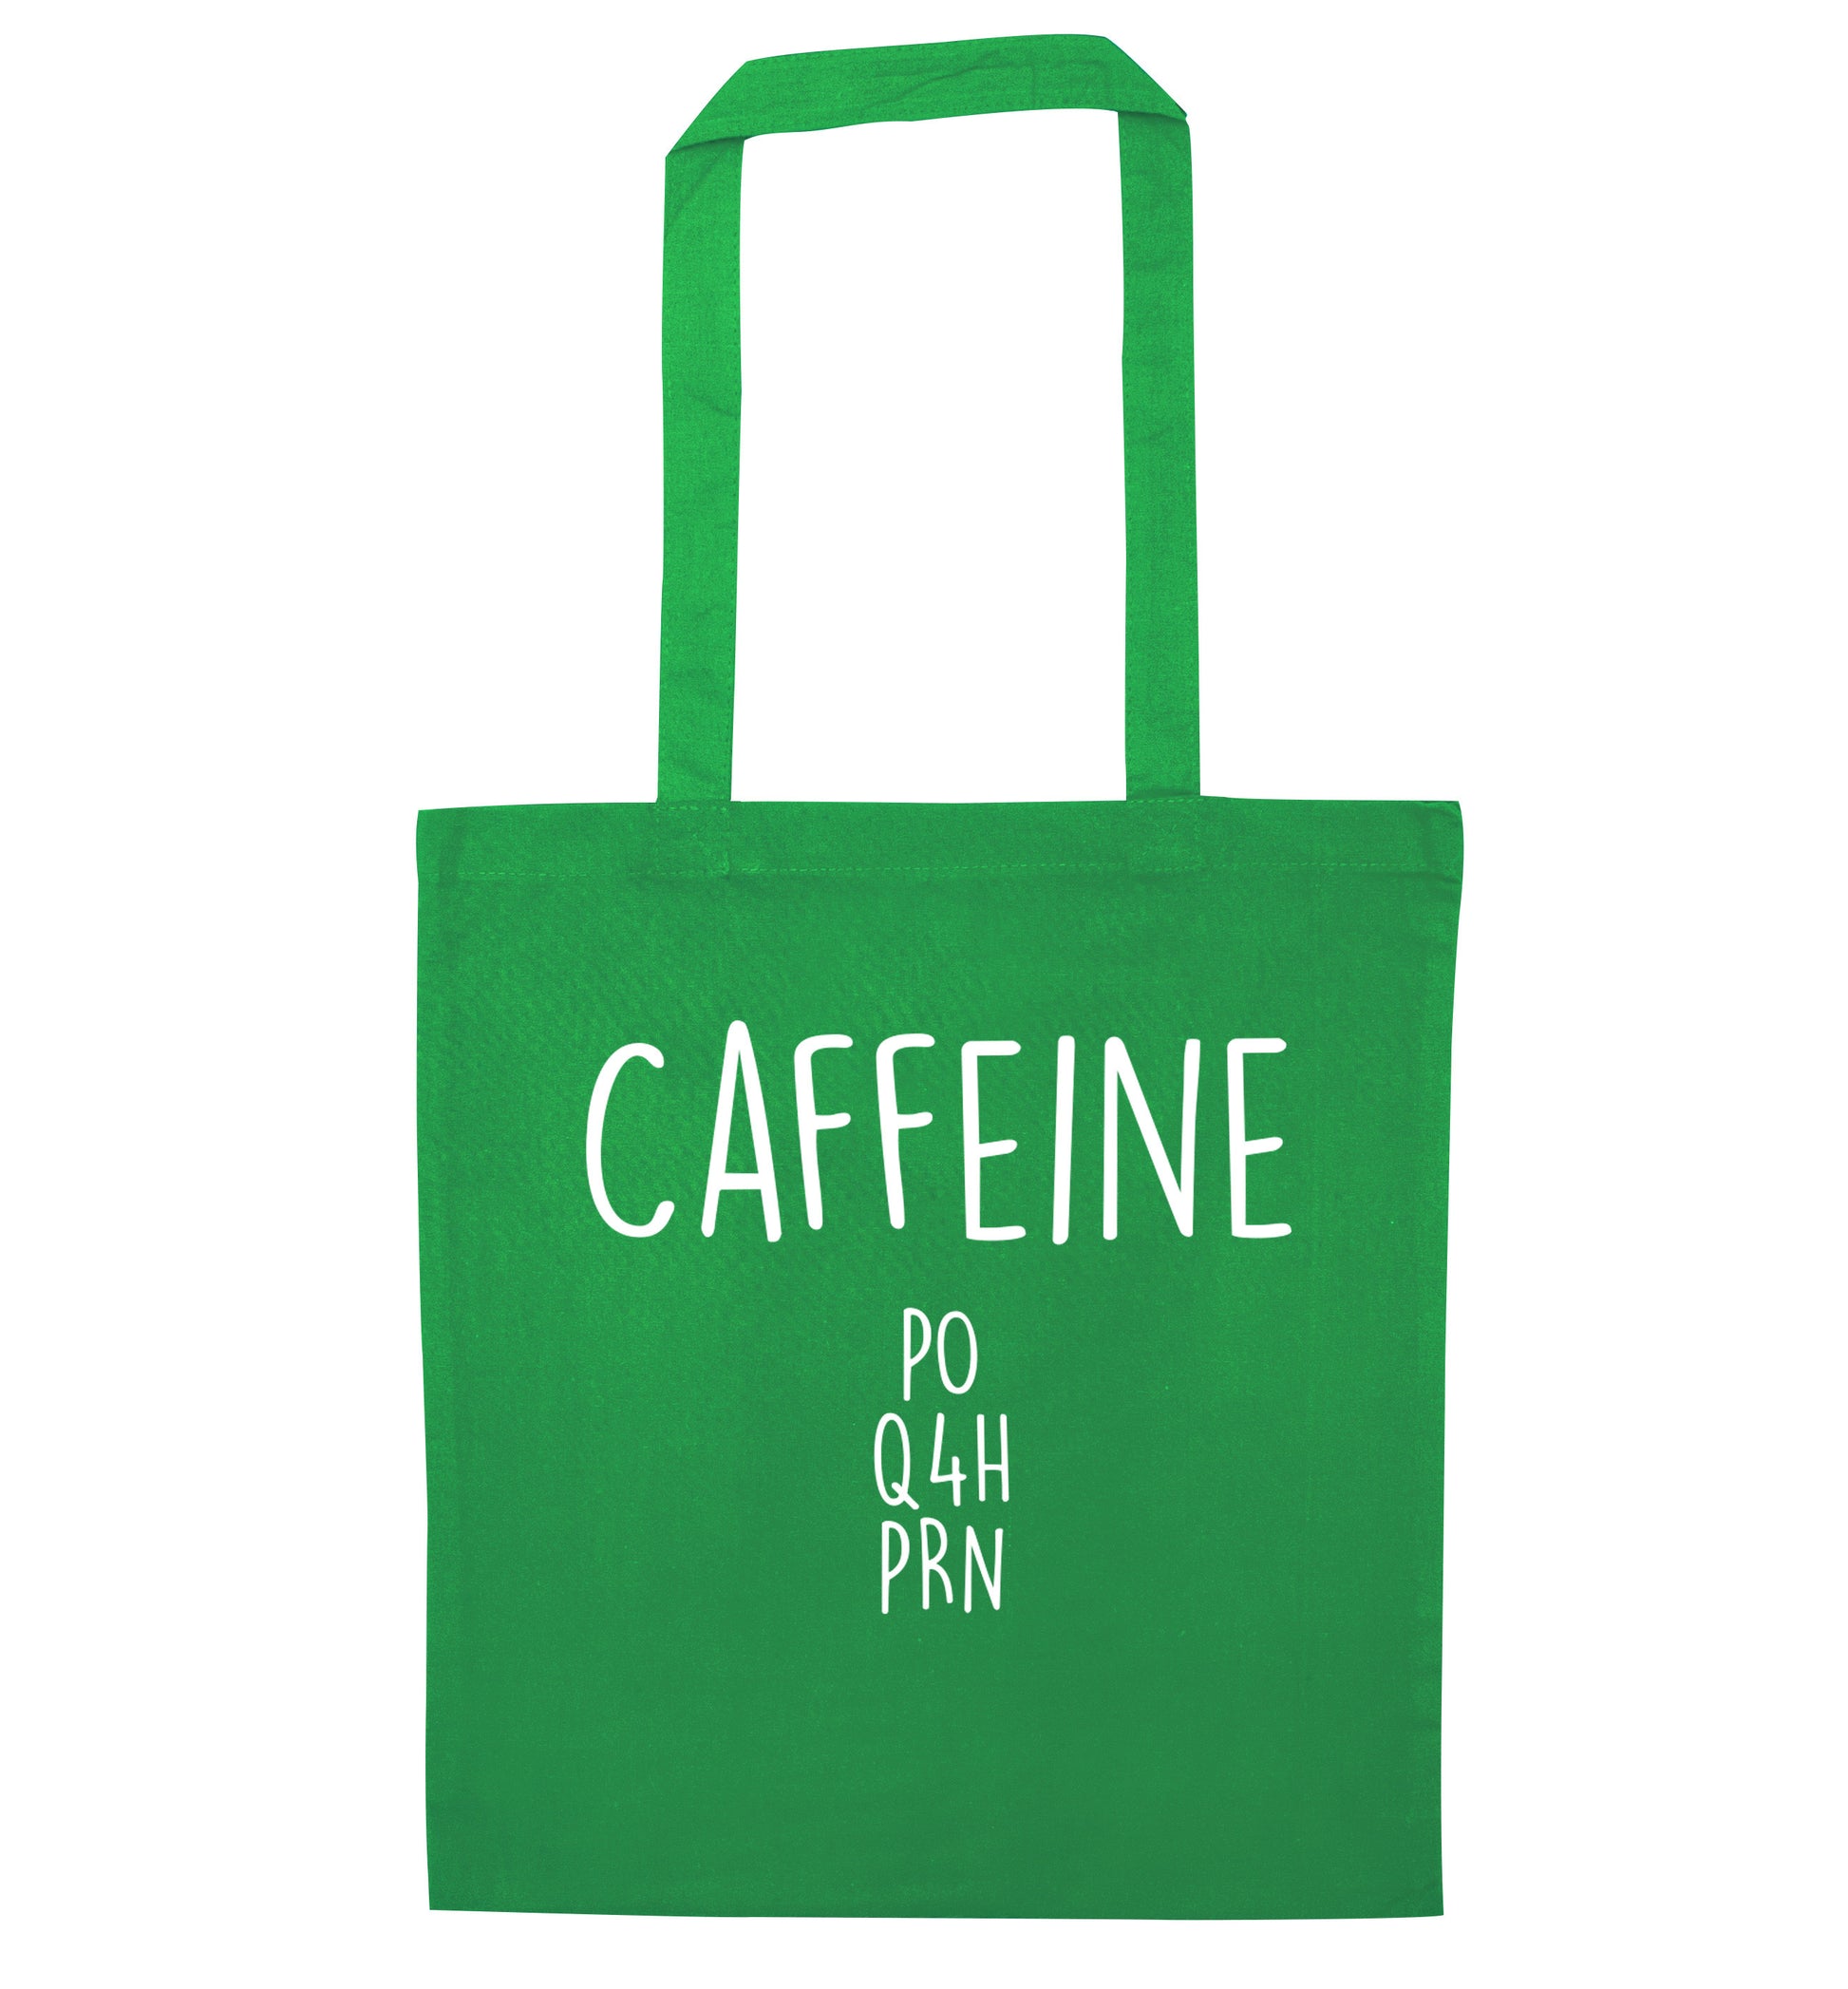 Caffeine PO Q4H PRN green tote bag